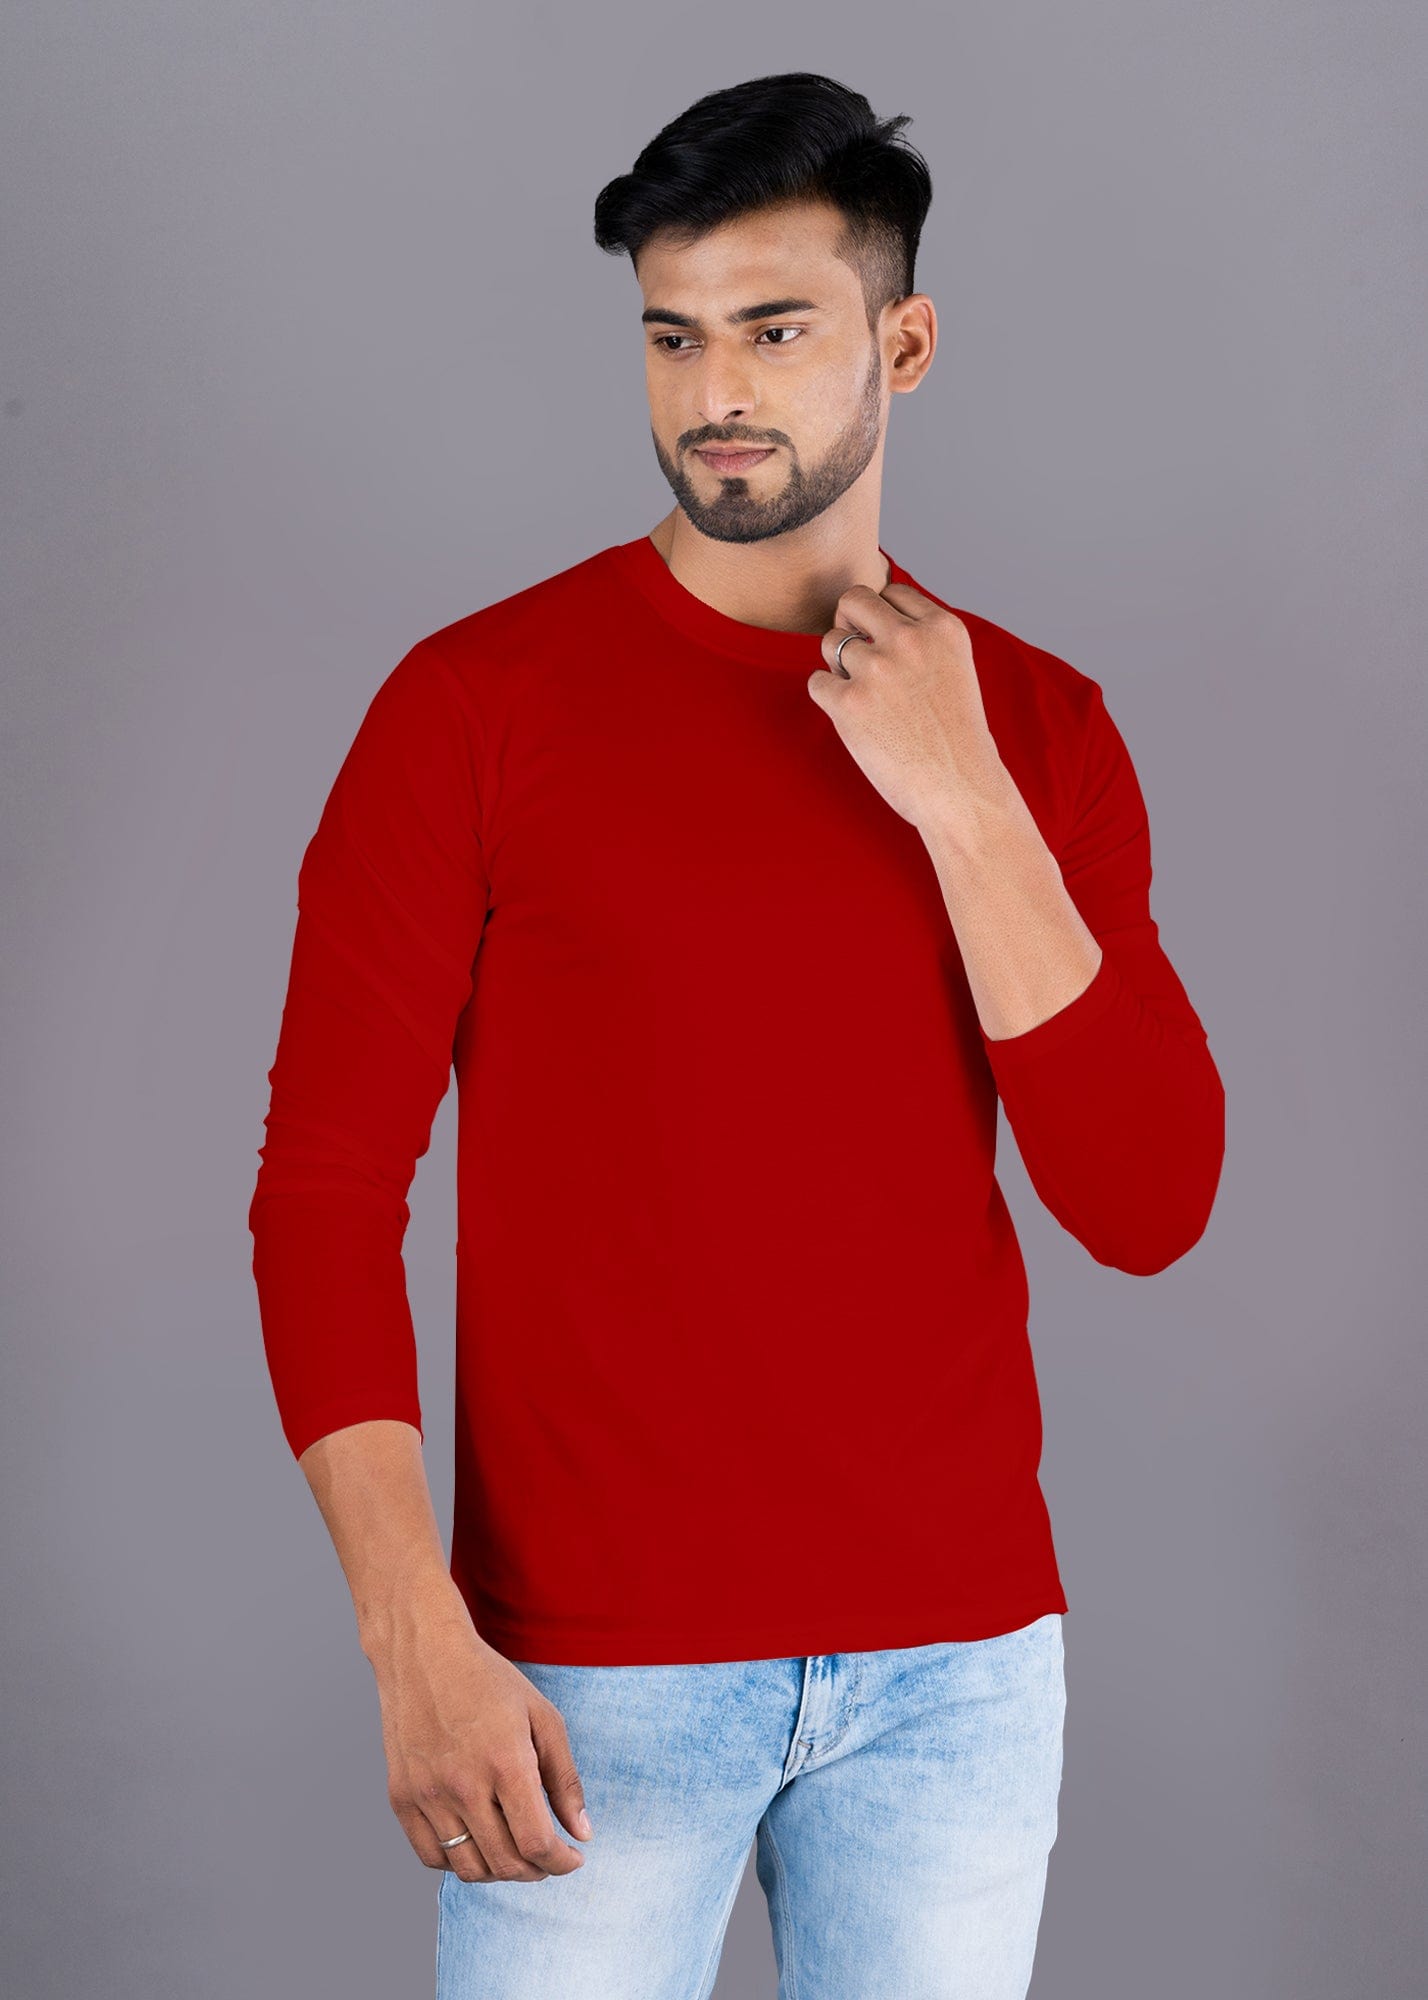 Solid Full Sleeve Premium Cotton T-Shirt For Men - Pack Of 4